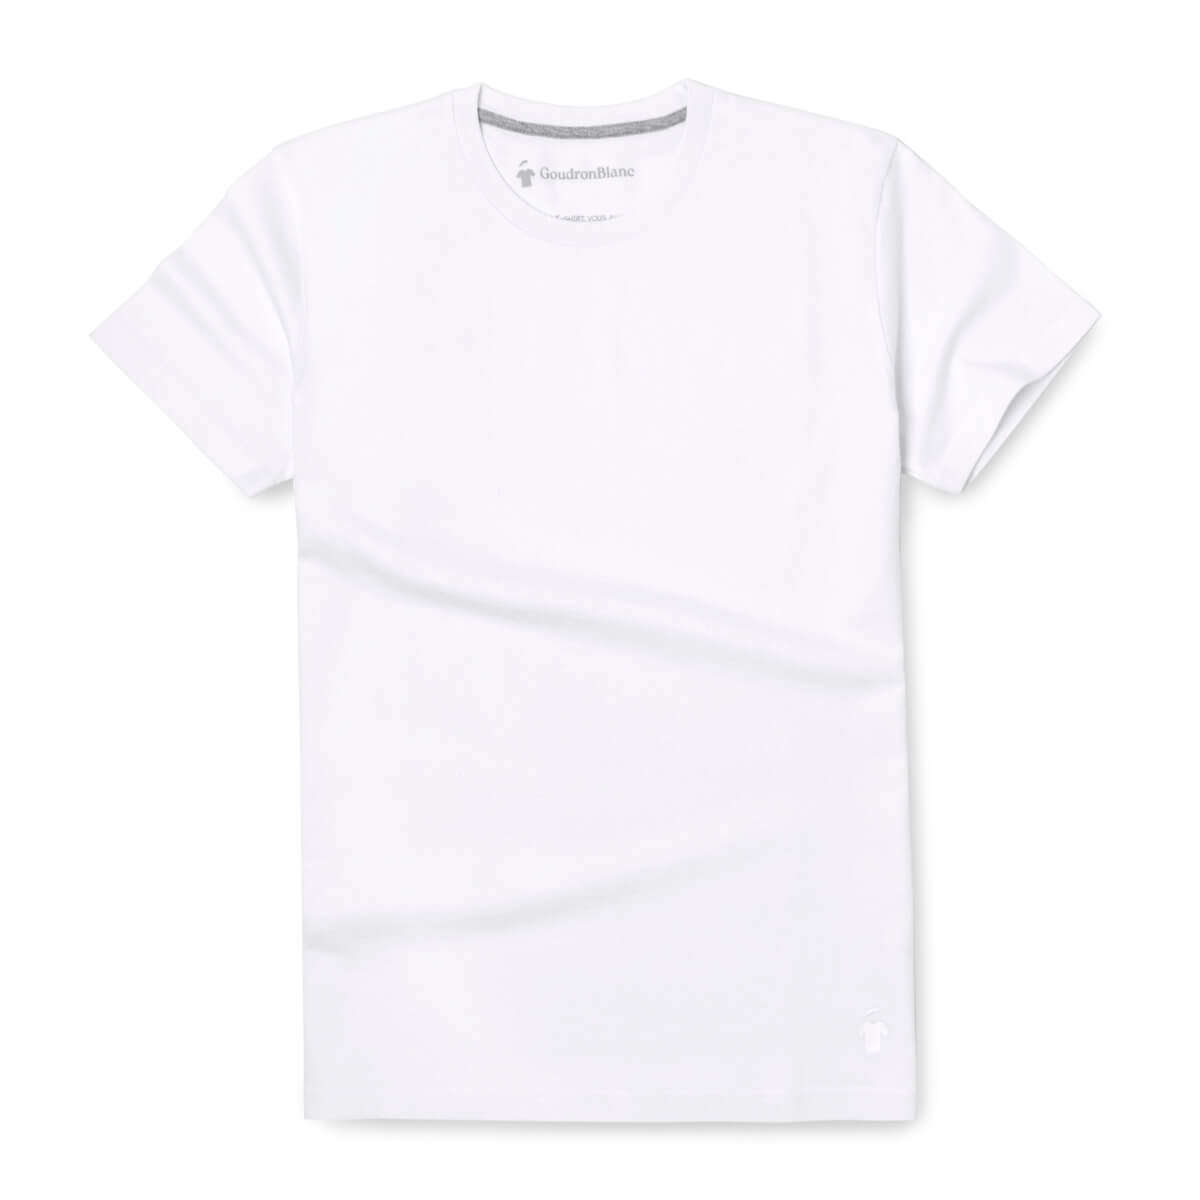 T-shirt blanc col rond - Logo brodé GoudronBlanc